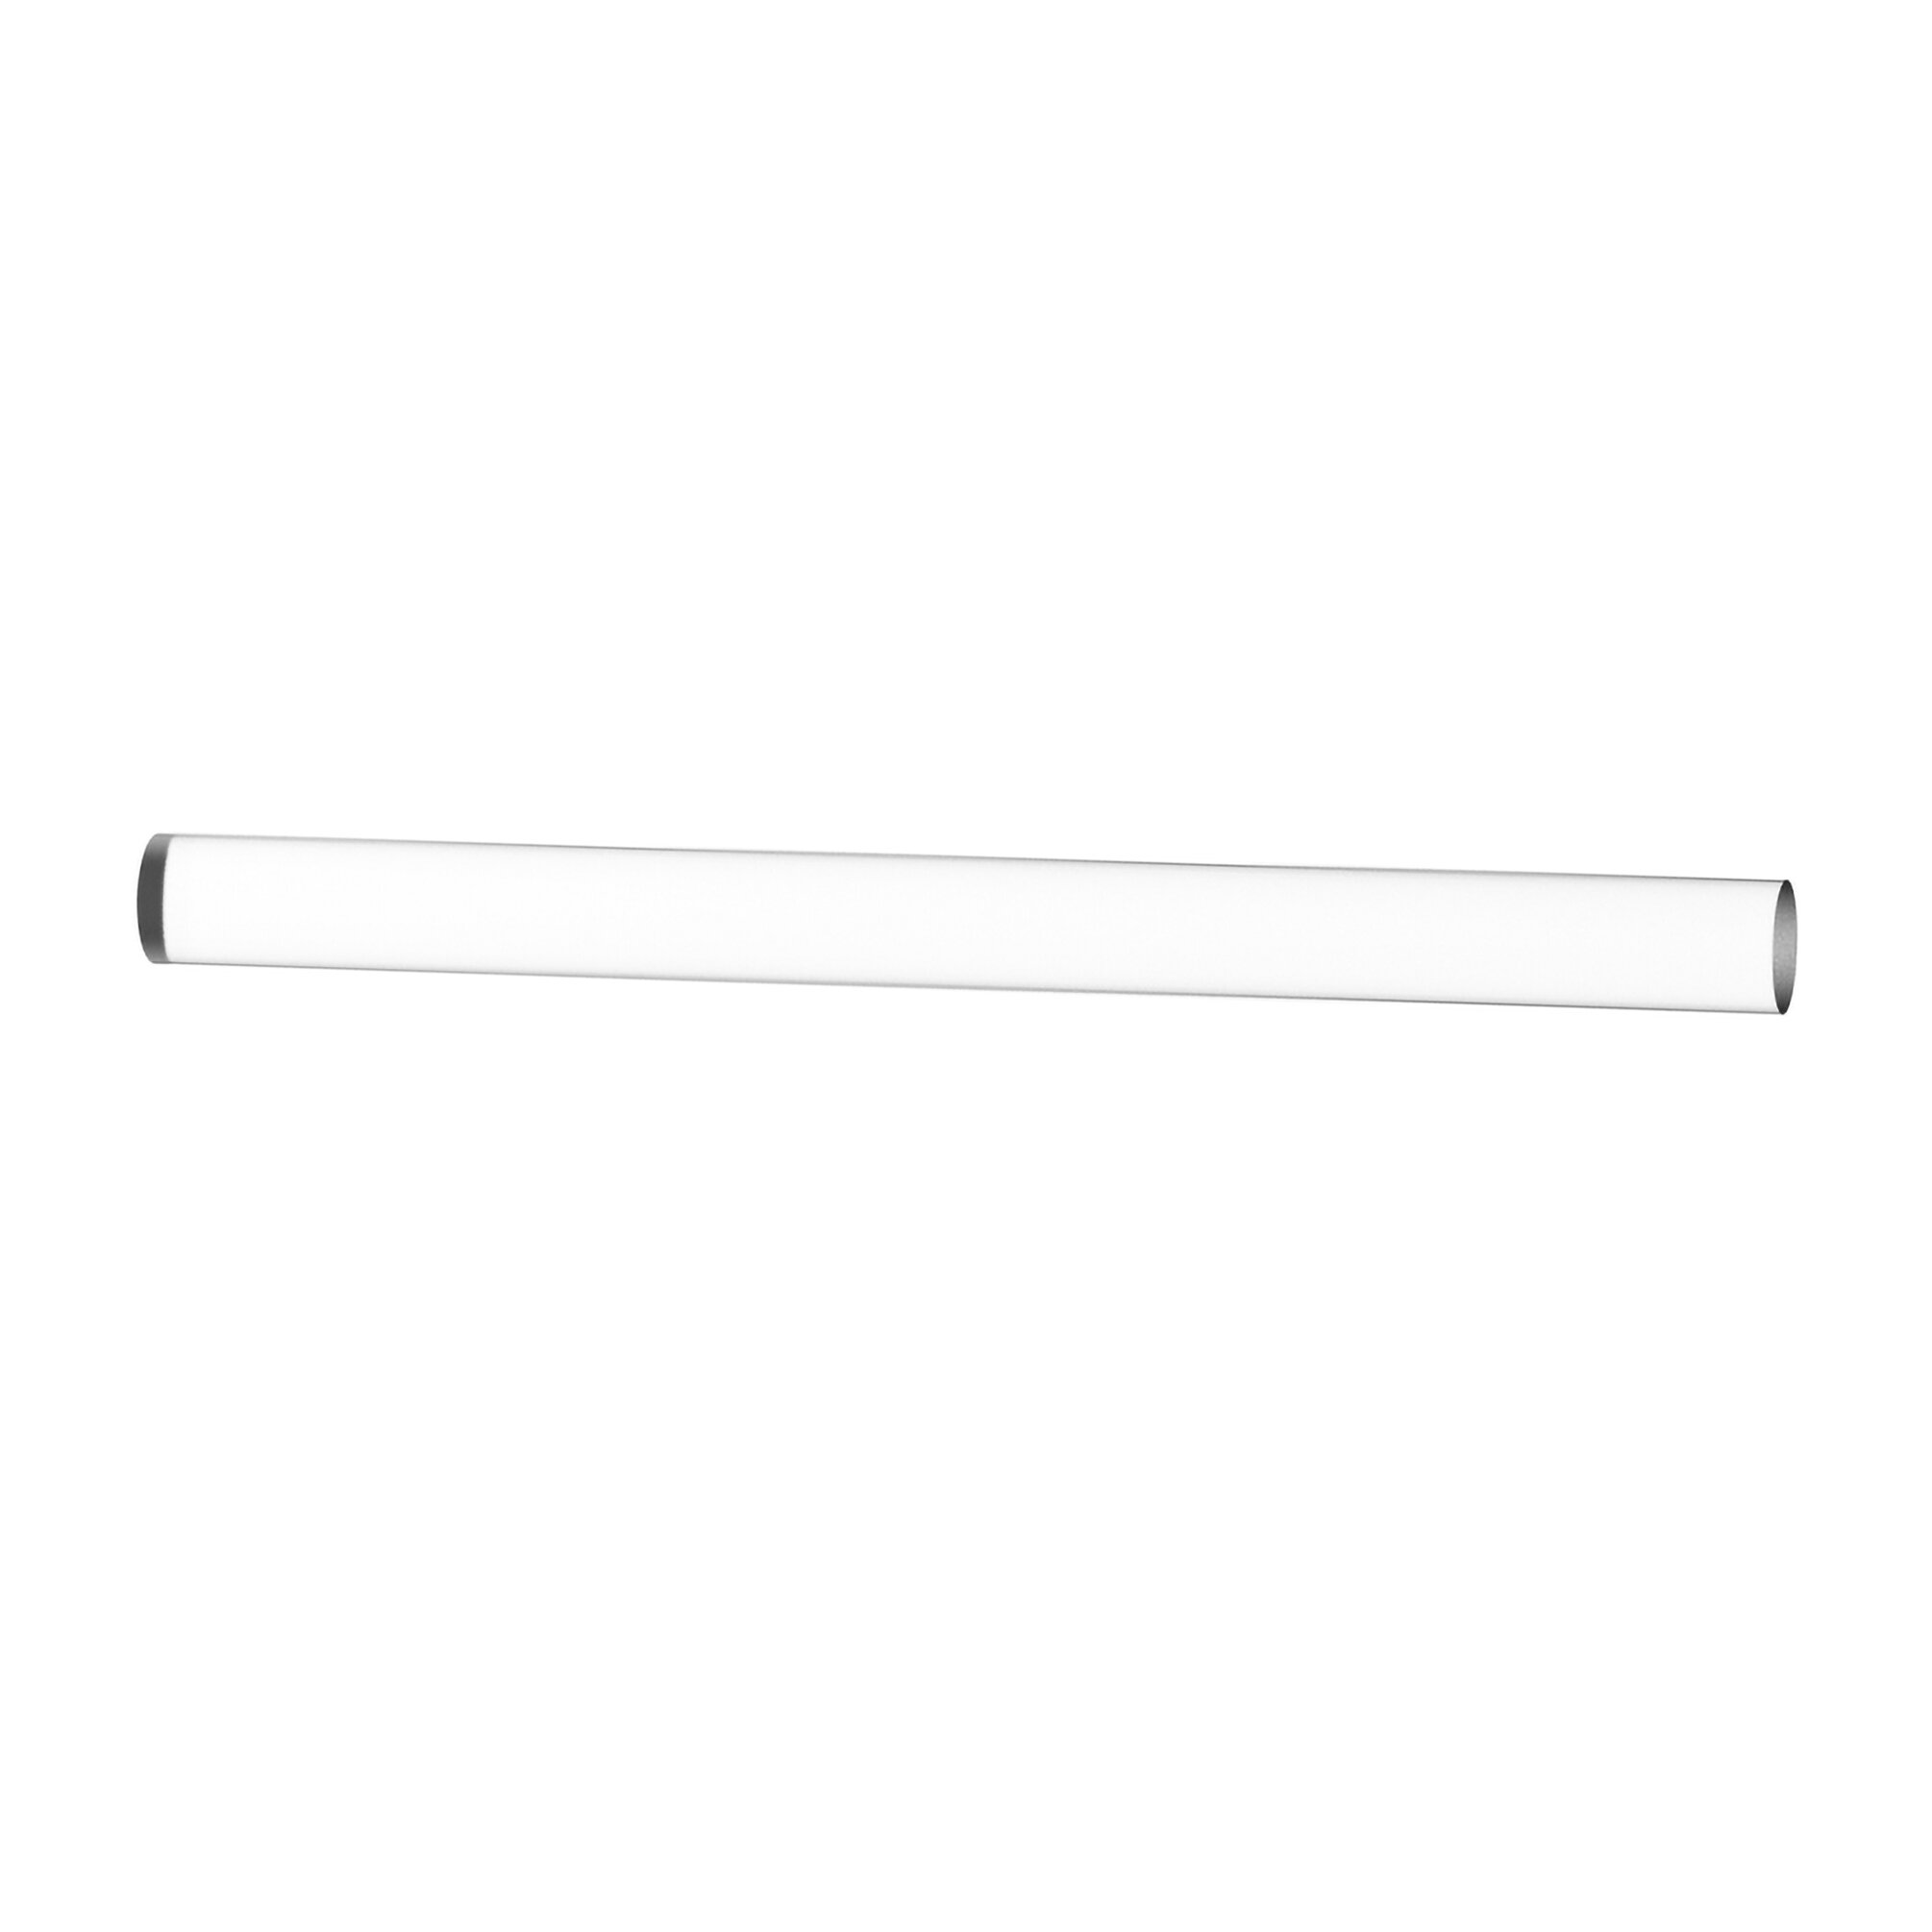 Fixturedisplays 10132-30 25mm (Nominal 1) Diameter x 30 Long Acrylic Rod Plexiglass Stick Clear Lucite Transparent Dowel